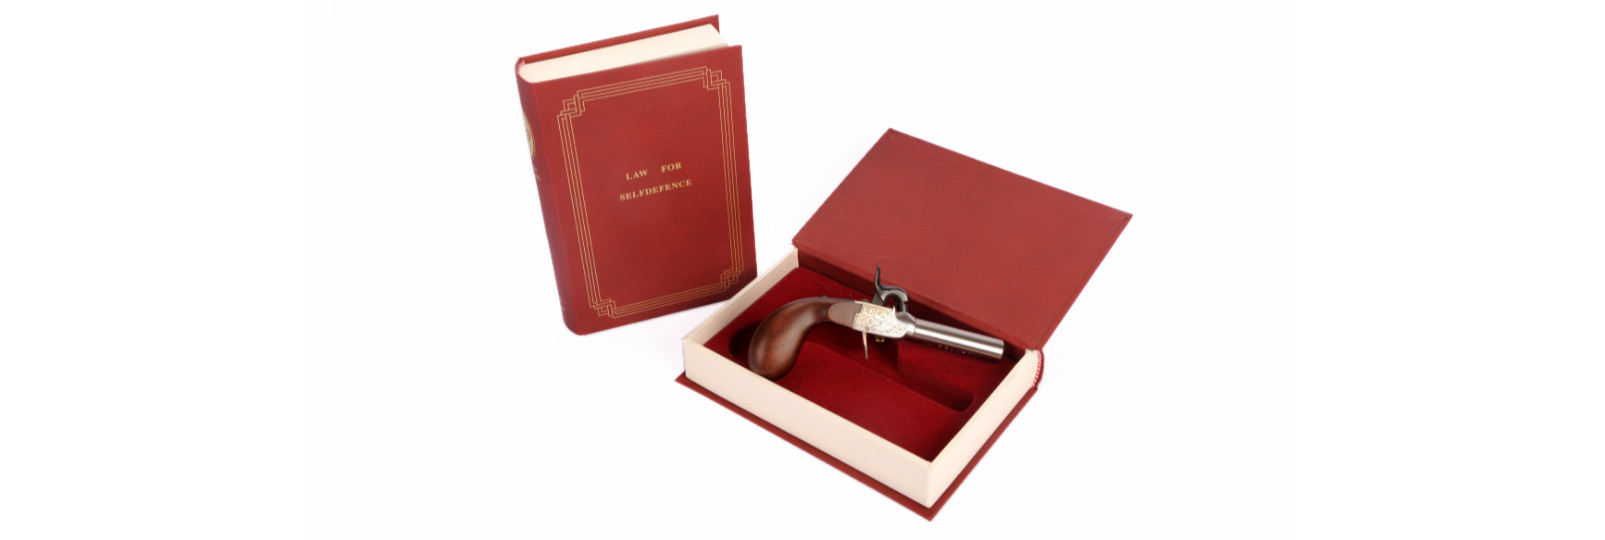 Derringer Liegi DELUXE Pistol with book case